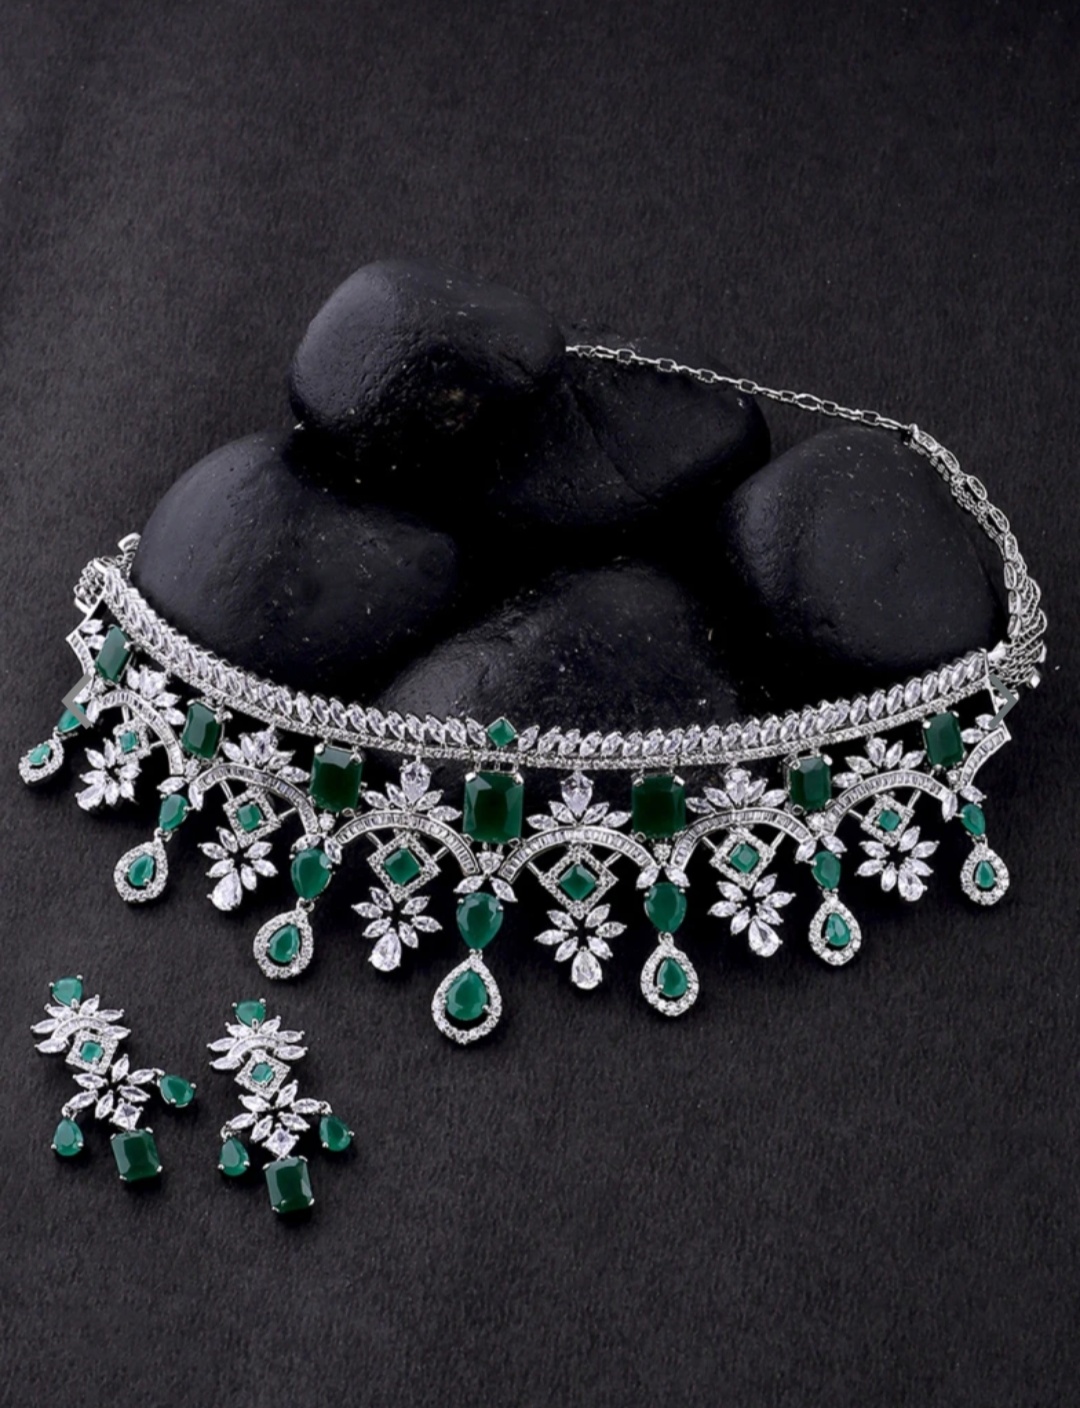 Diamond necklace designs